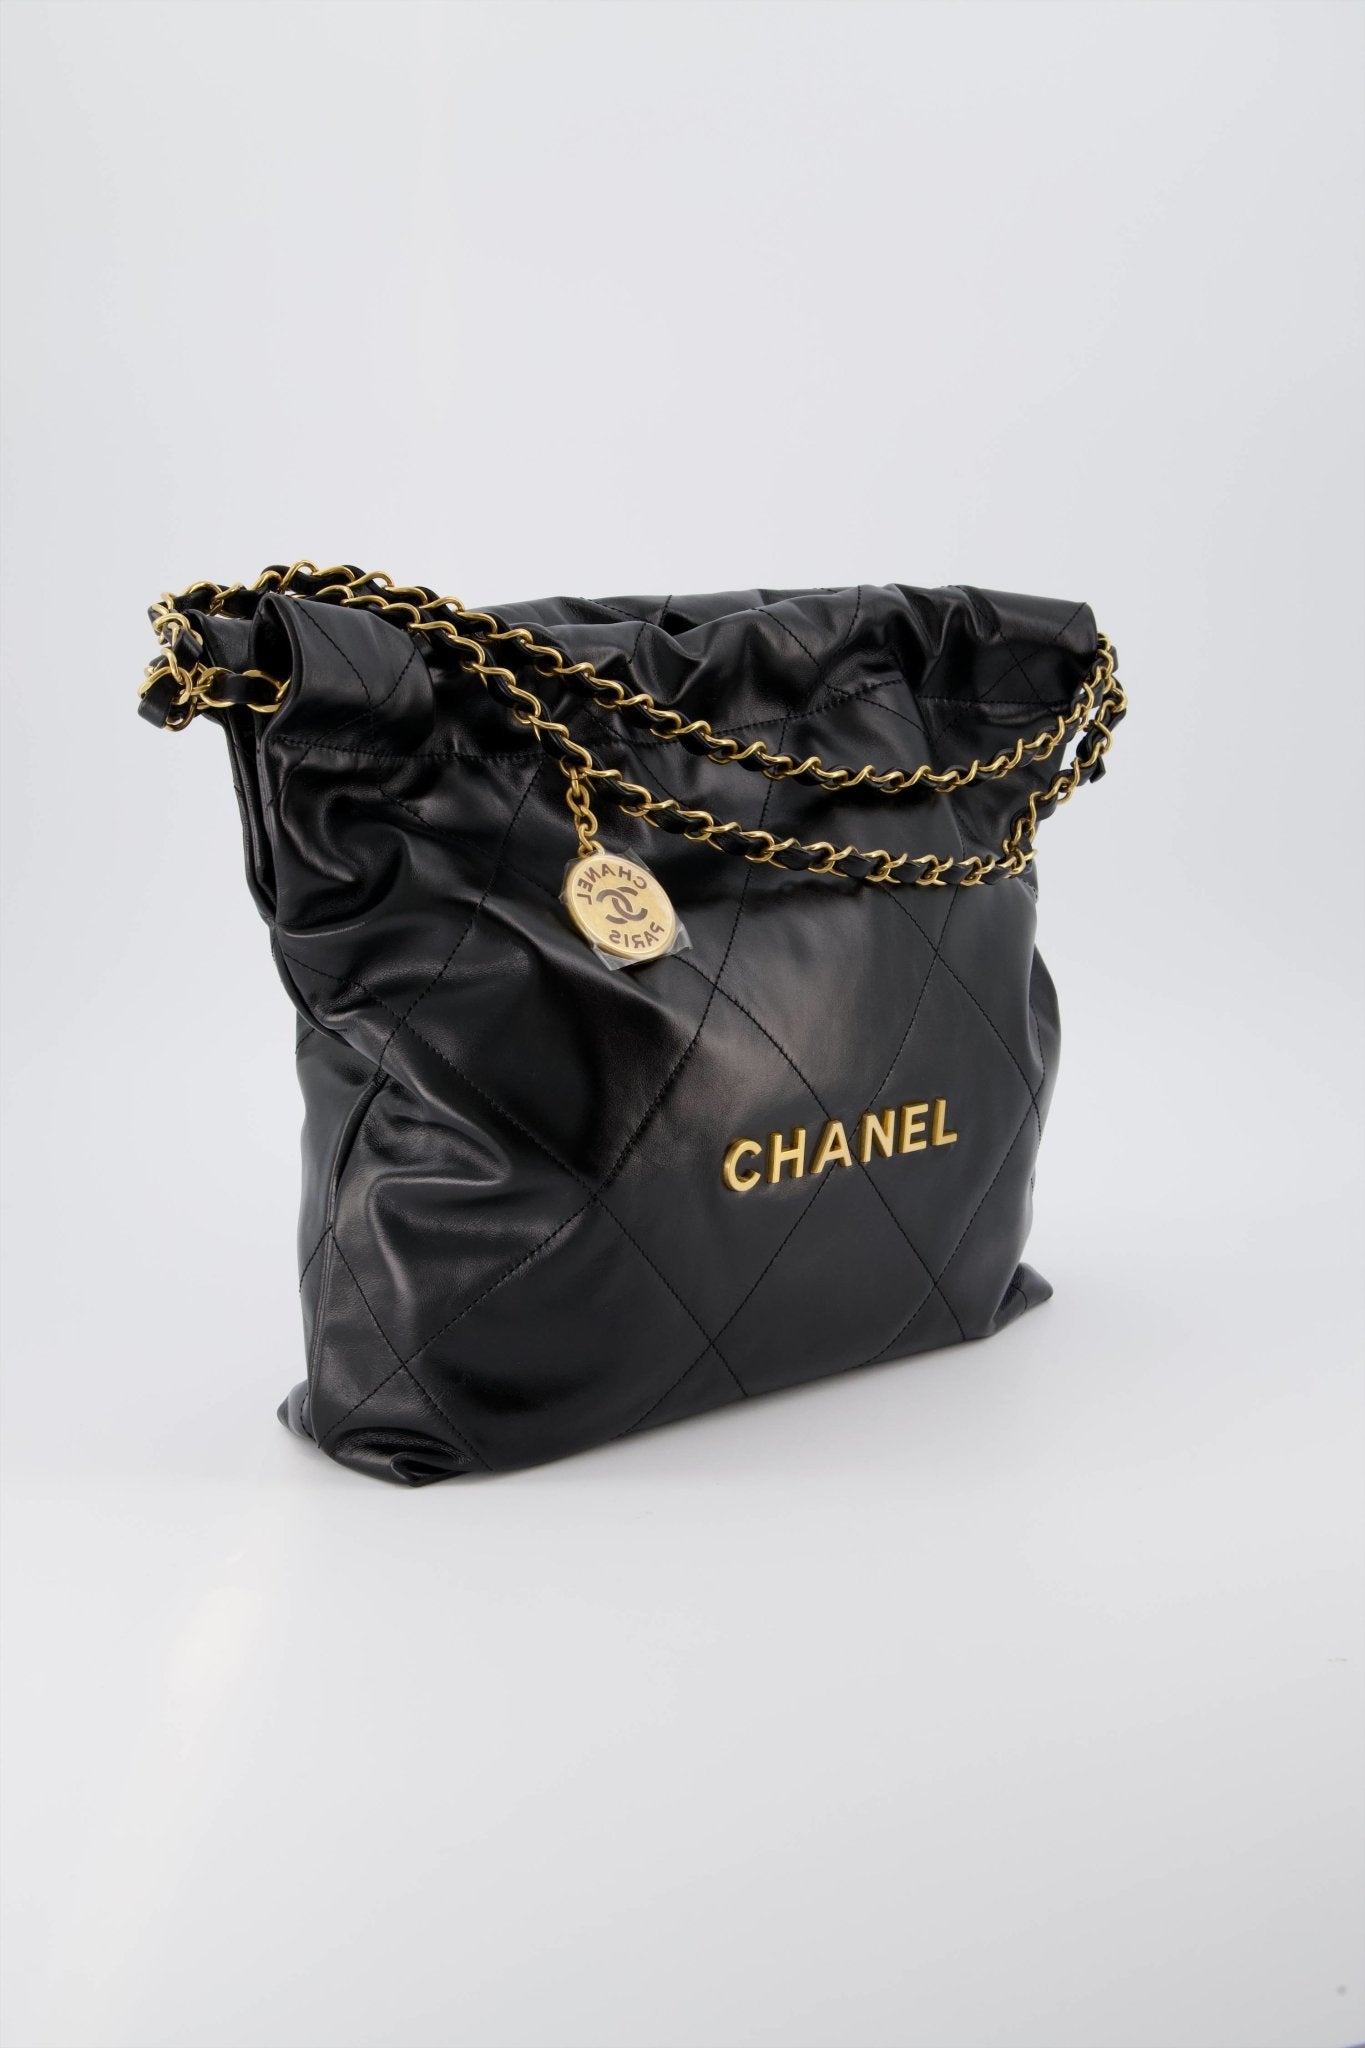 Chanel Debuts Its 22 Bag Ad Campaign